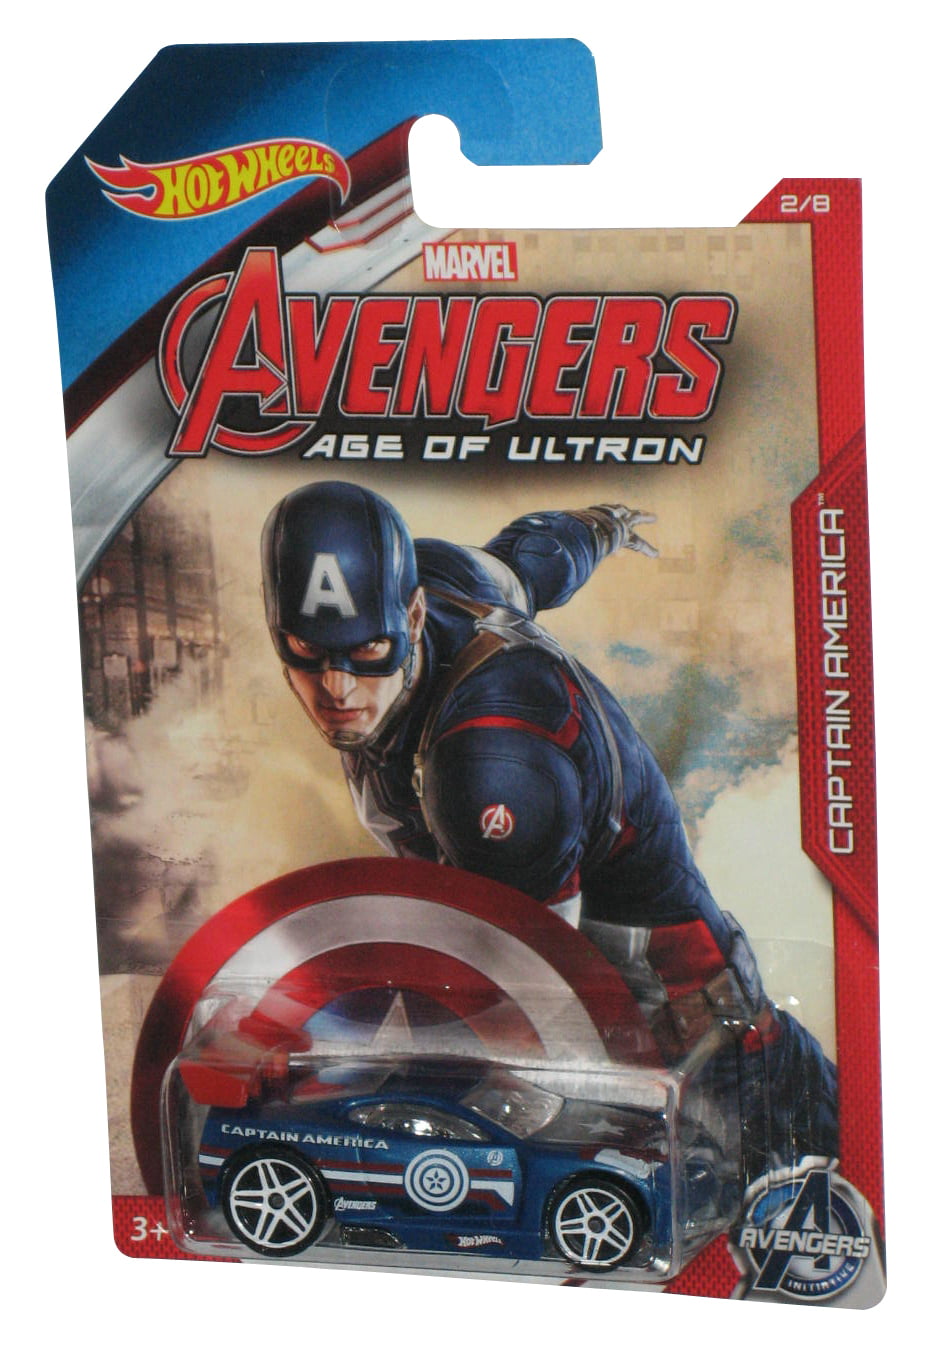 2015 HOT WHEELS Marvel Avengers Age of Ultron #2 Captain America Power Rage 